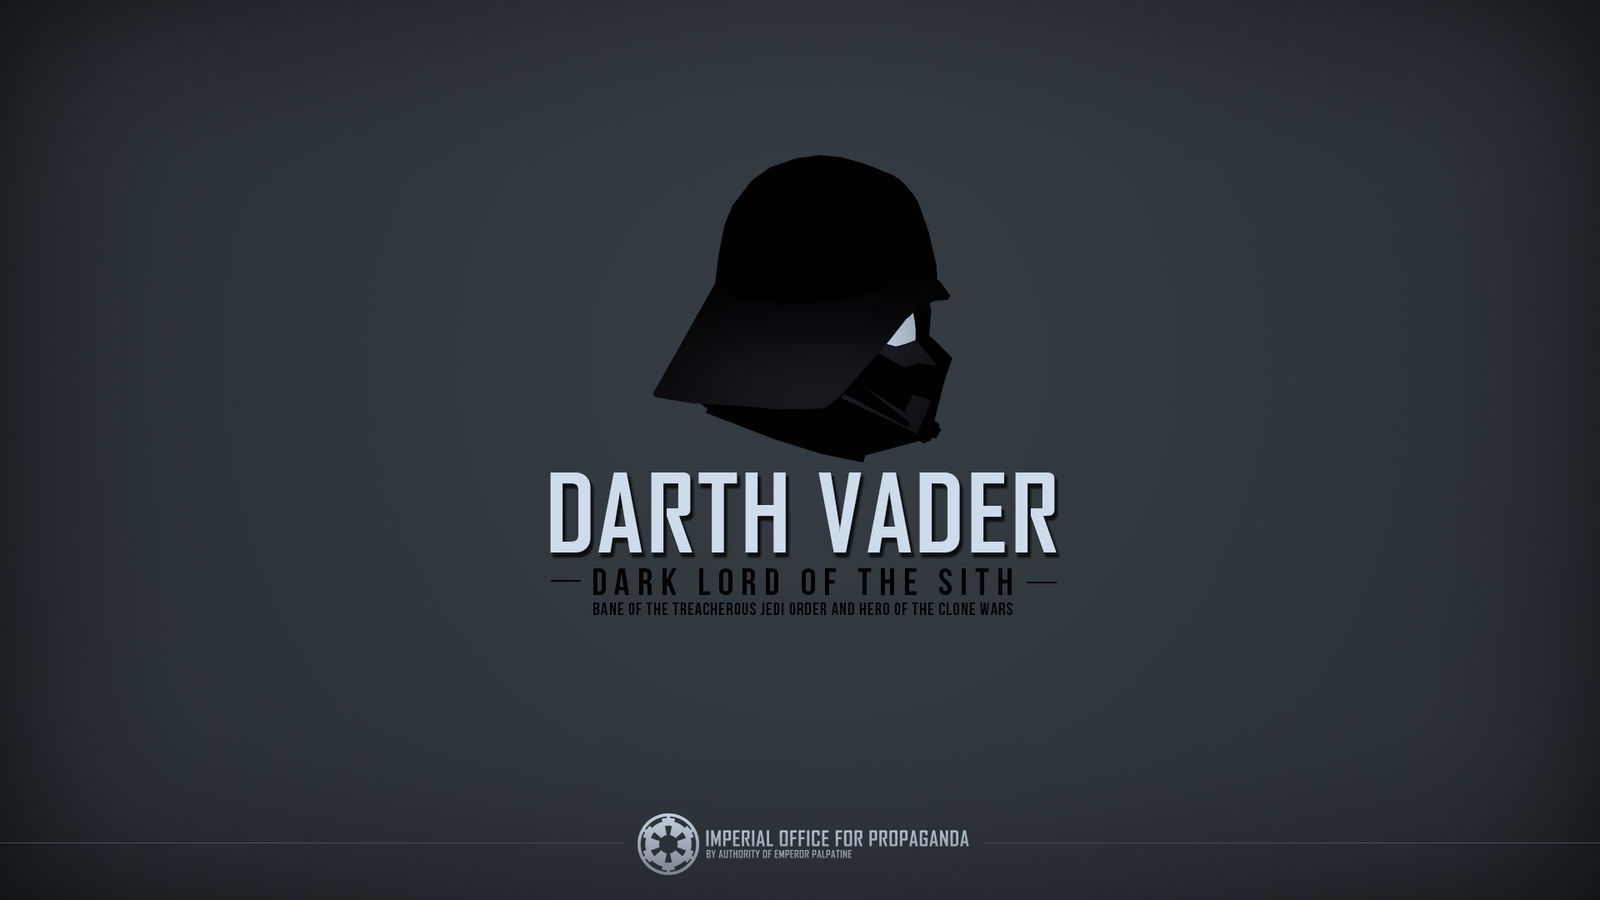 Sith Lord Darth Vader Wallpapers